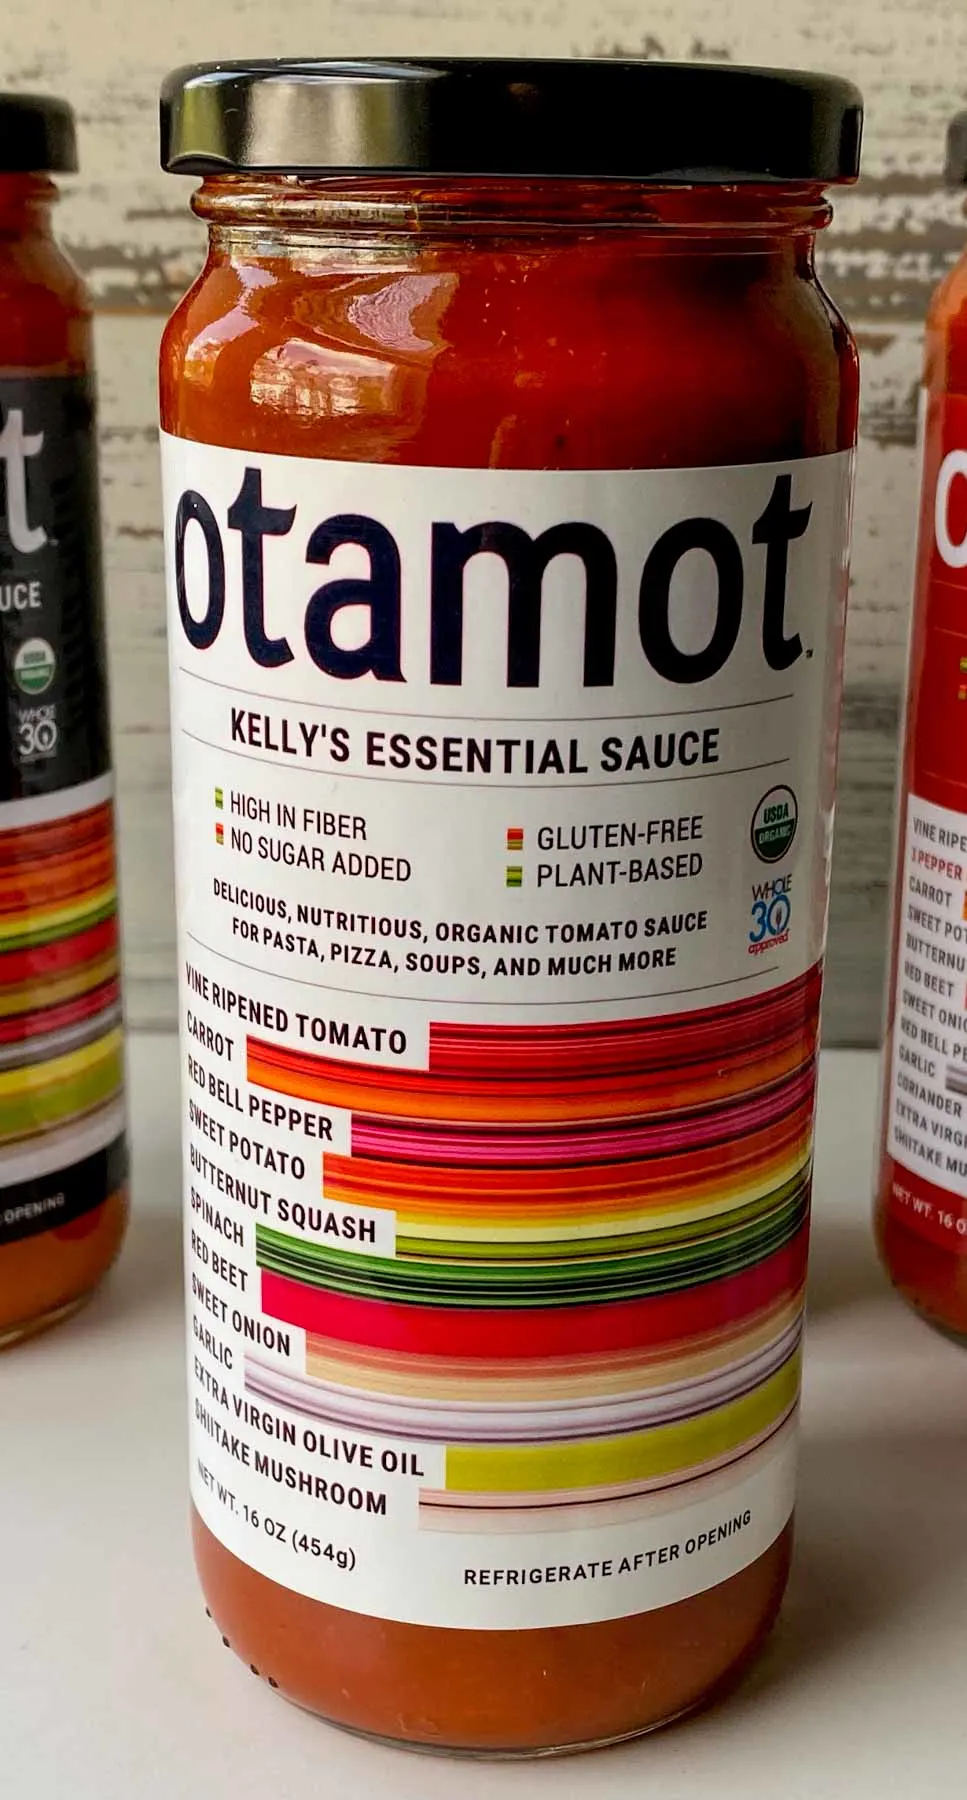 Personalized jar of Otamot sauce